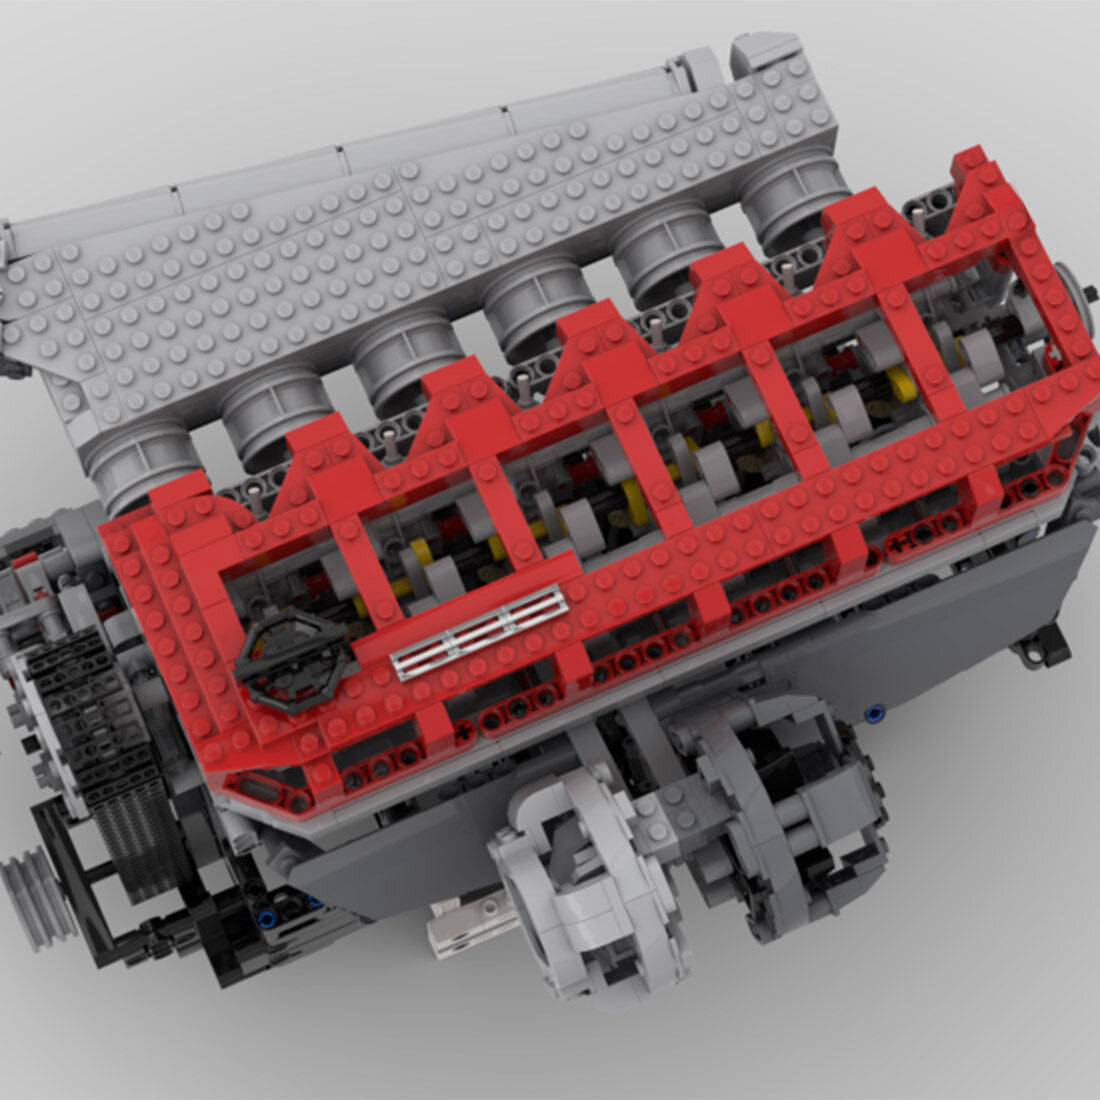 MOC RB-26 Six-Cylinder Four-Stroke Gasoline Engine Model Building Blocks Toy Set -1985PCS-Build Your Own L6 Engine enginediyshop